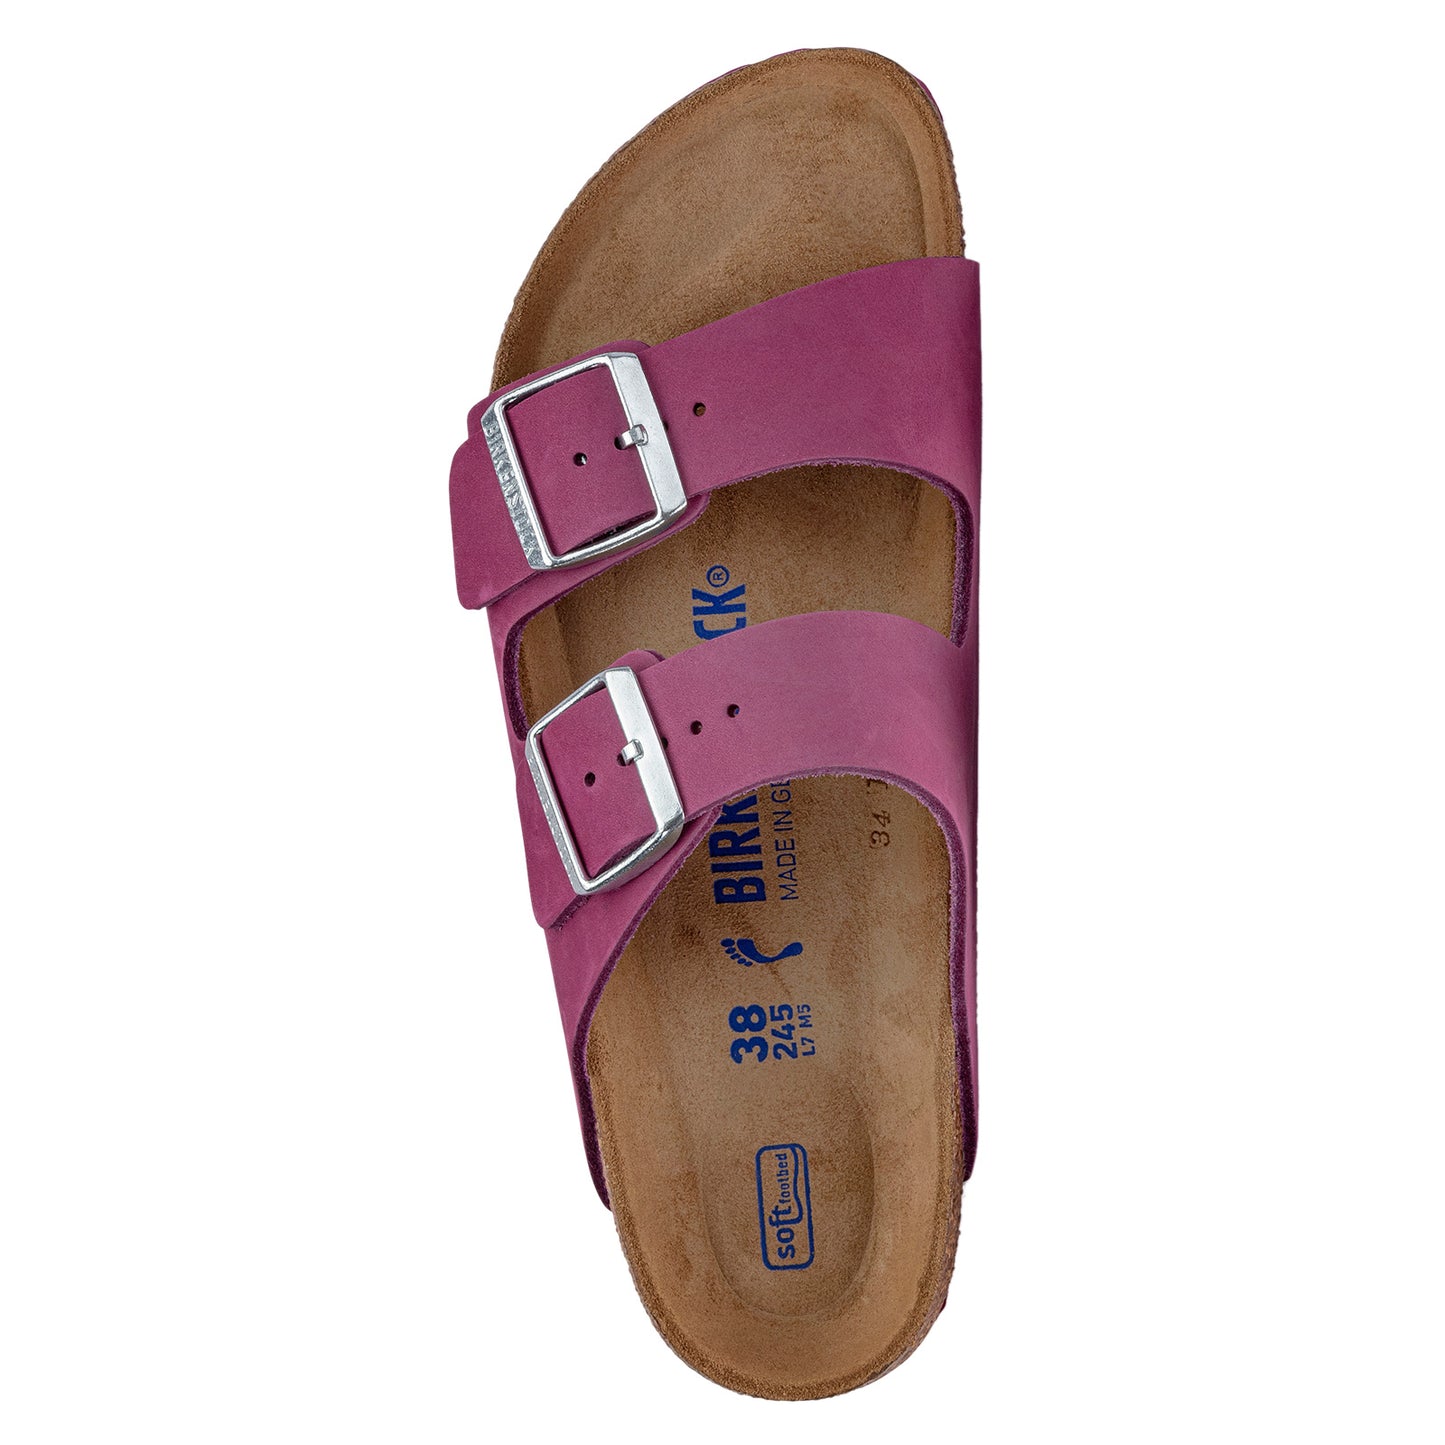 Peltz Shoes  Women's Birkenstock Arizona Soft Footbed Sandal - Narrow Width FUCHSIA 1023 391 N